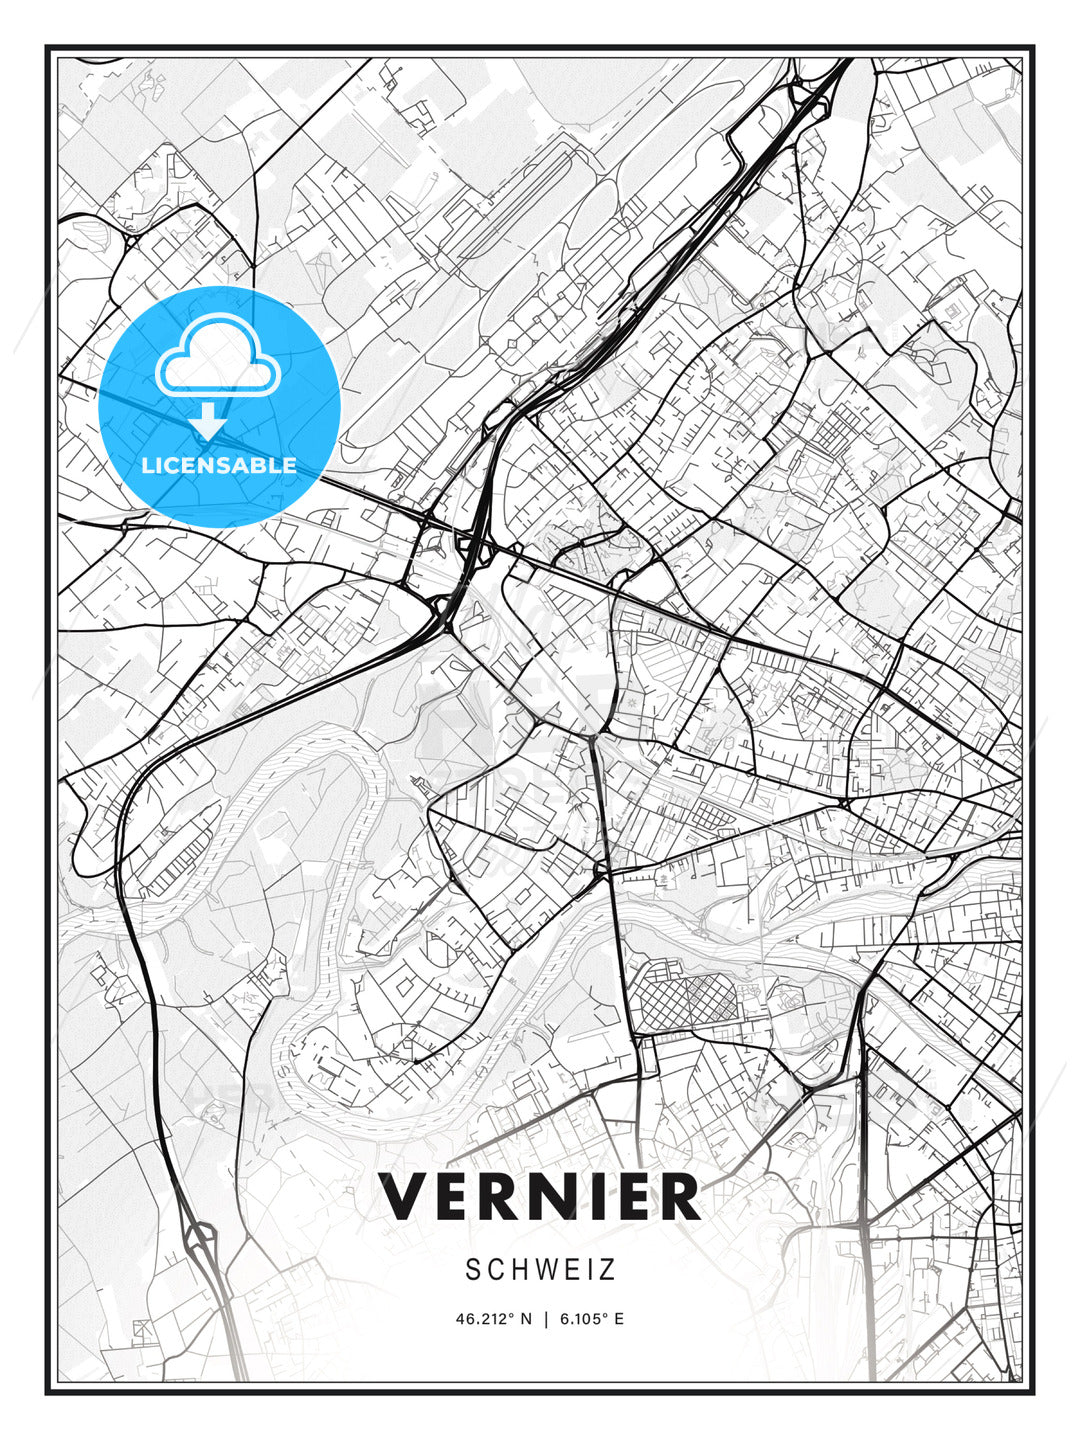 Vernier, Switzerland, Modern Print Template in Various Formats - HEBSTREITS Sketches